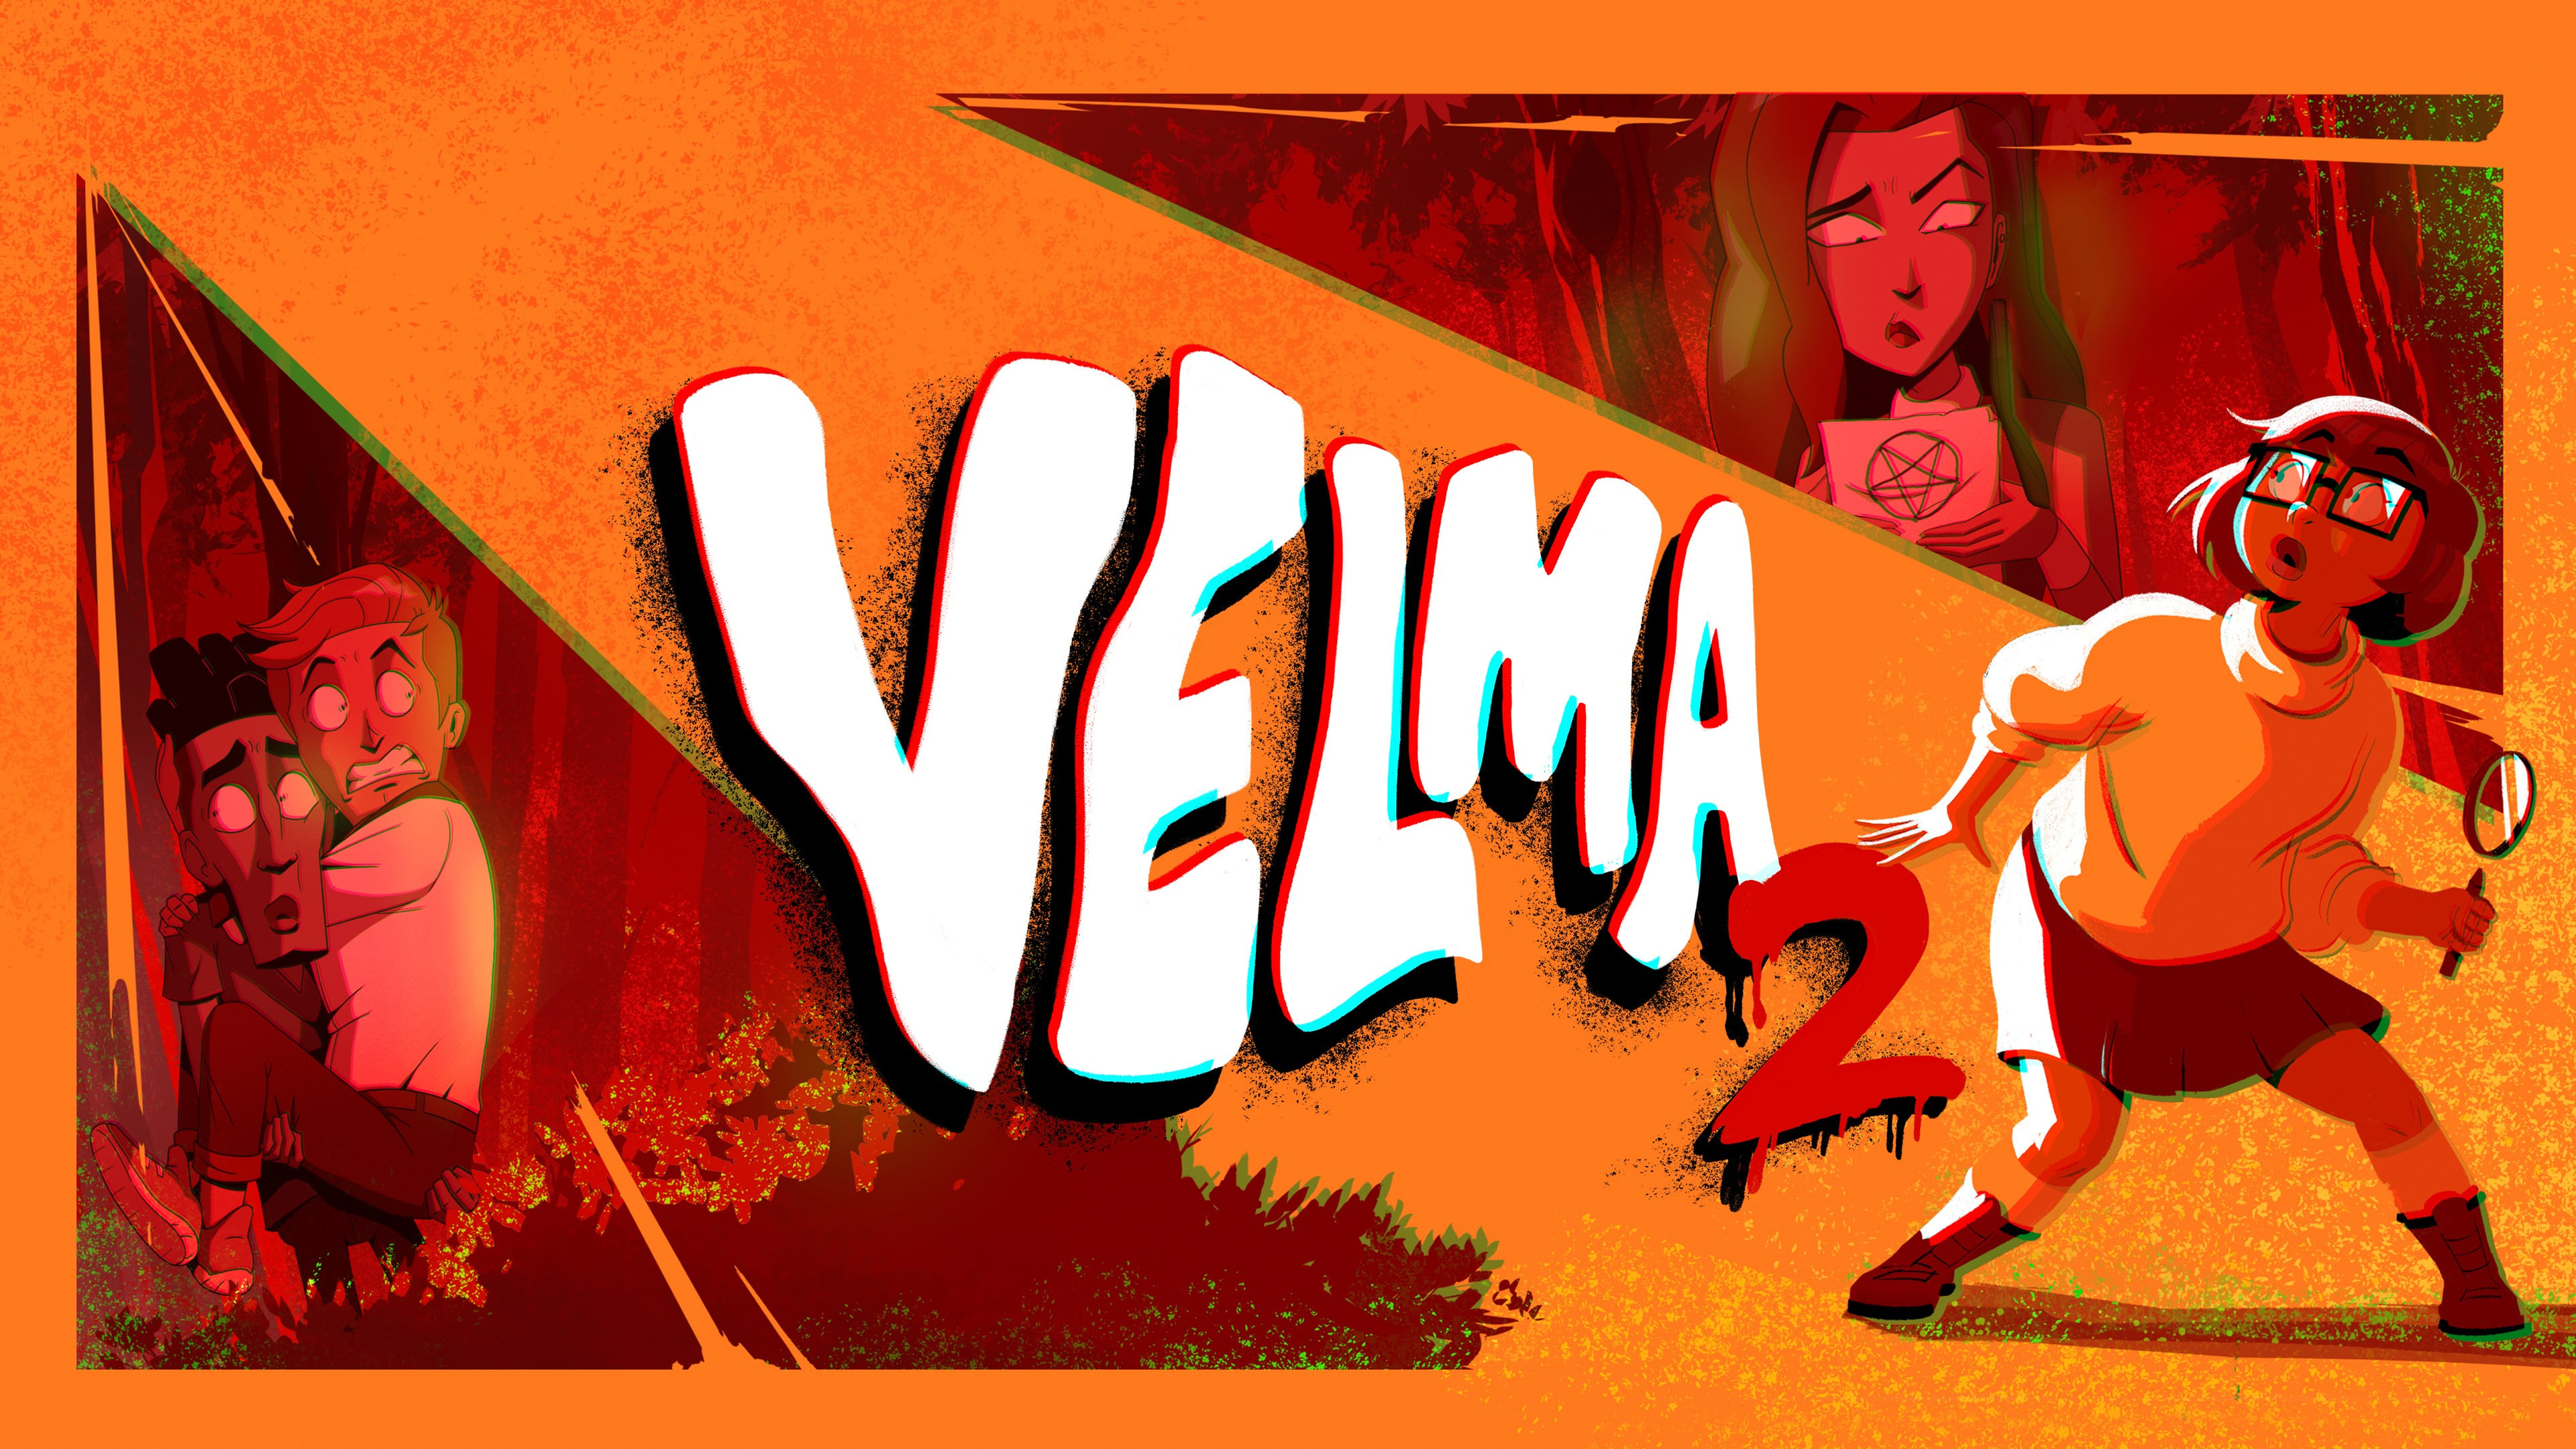 Velma - Season 2 Episode 7